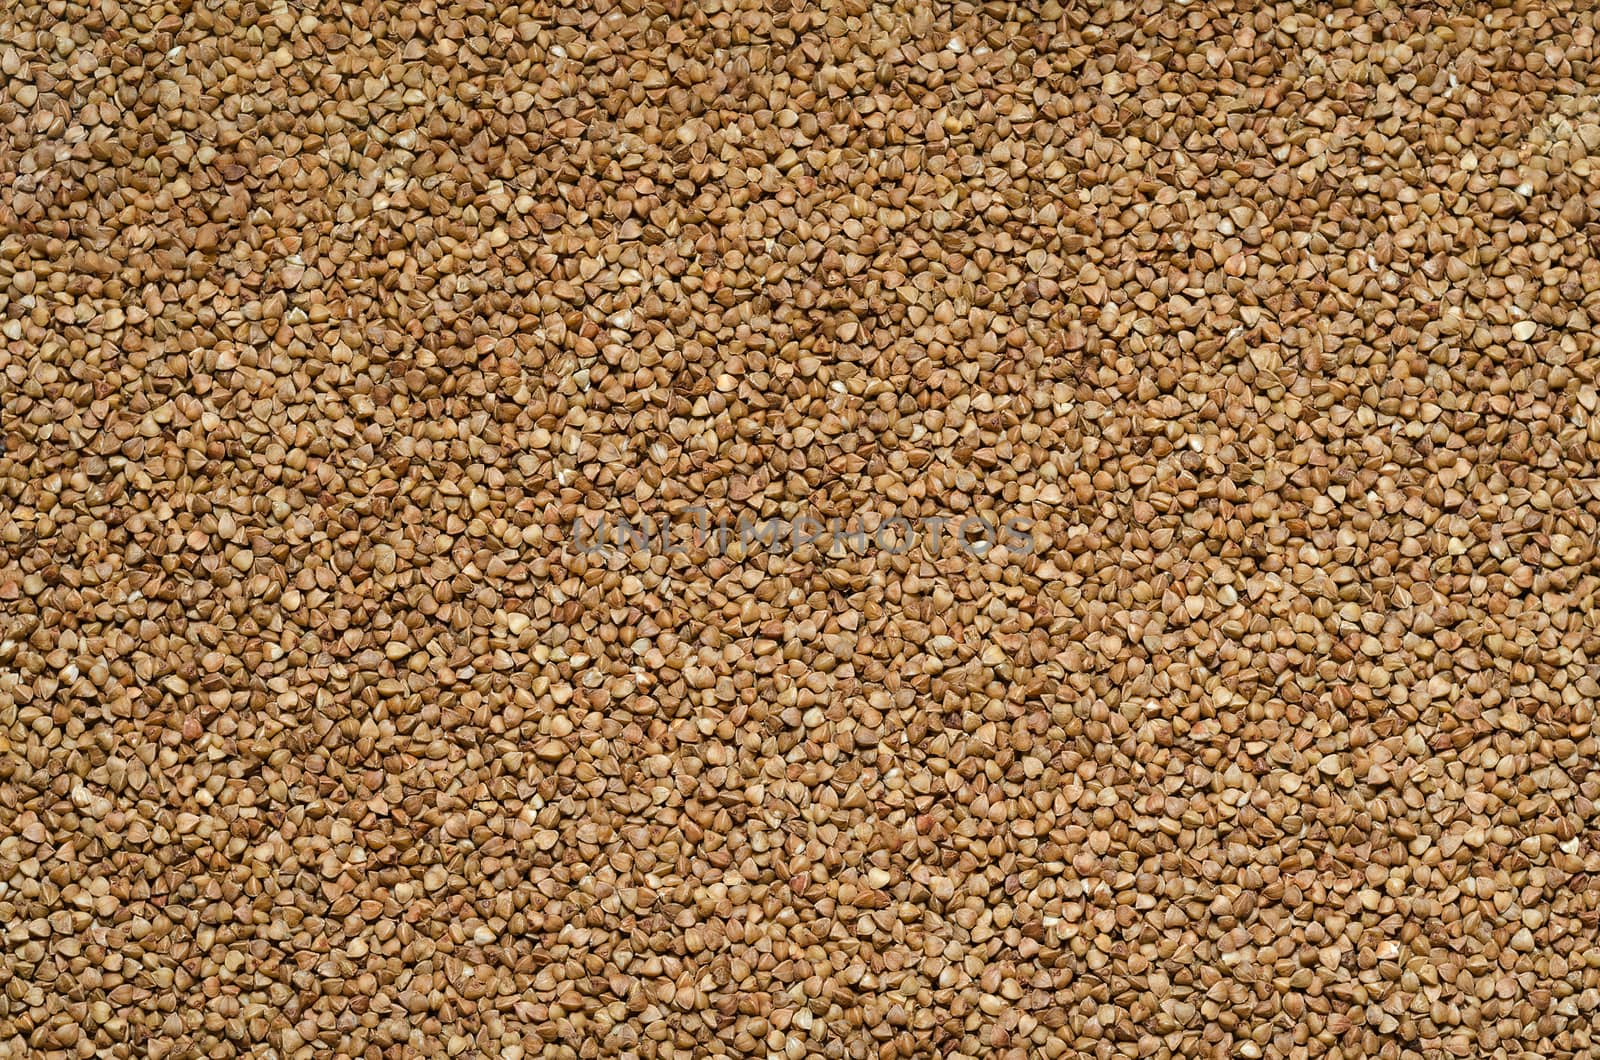 Background of buckwheat rassypannoj on surface by Gaina